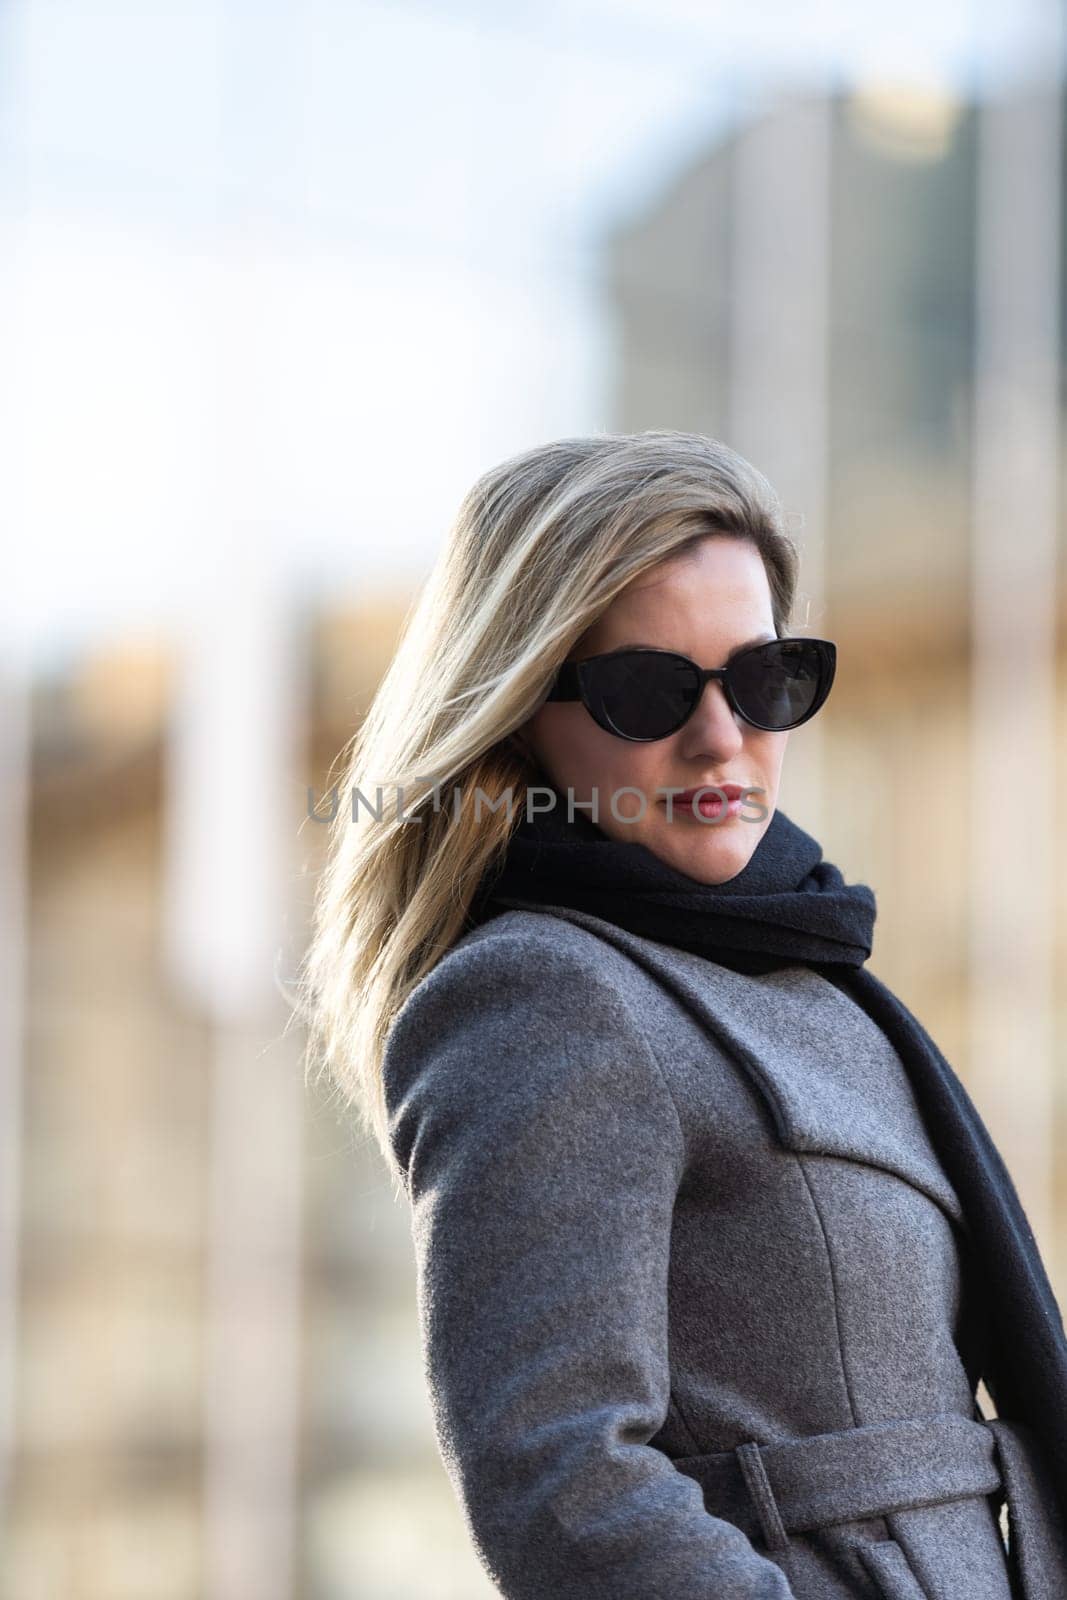 Beautiful fashion girl in sunglasses. Close-up portrait. High quality photo